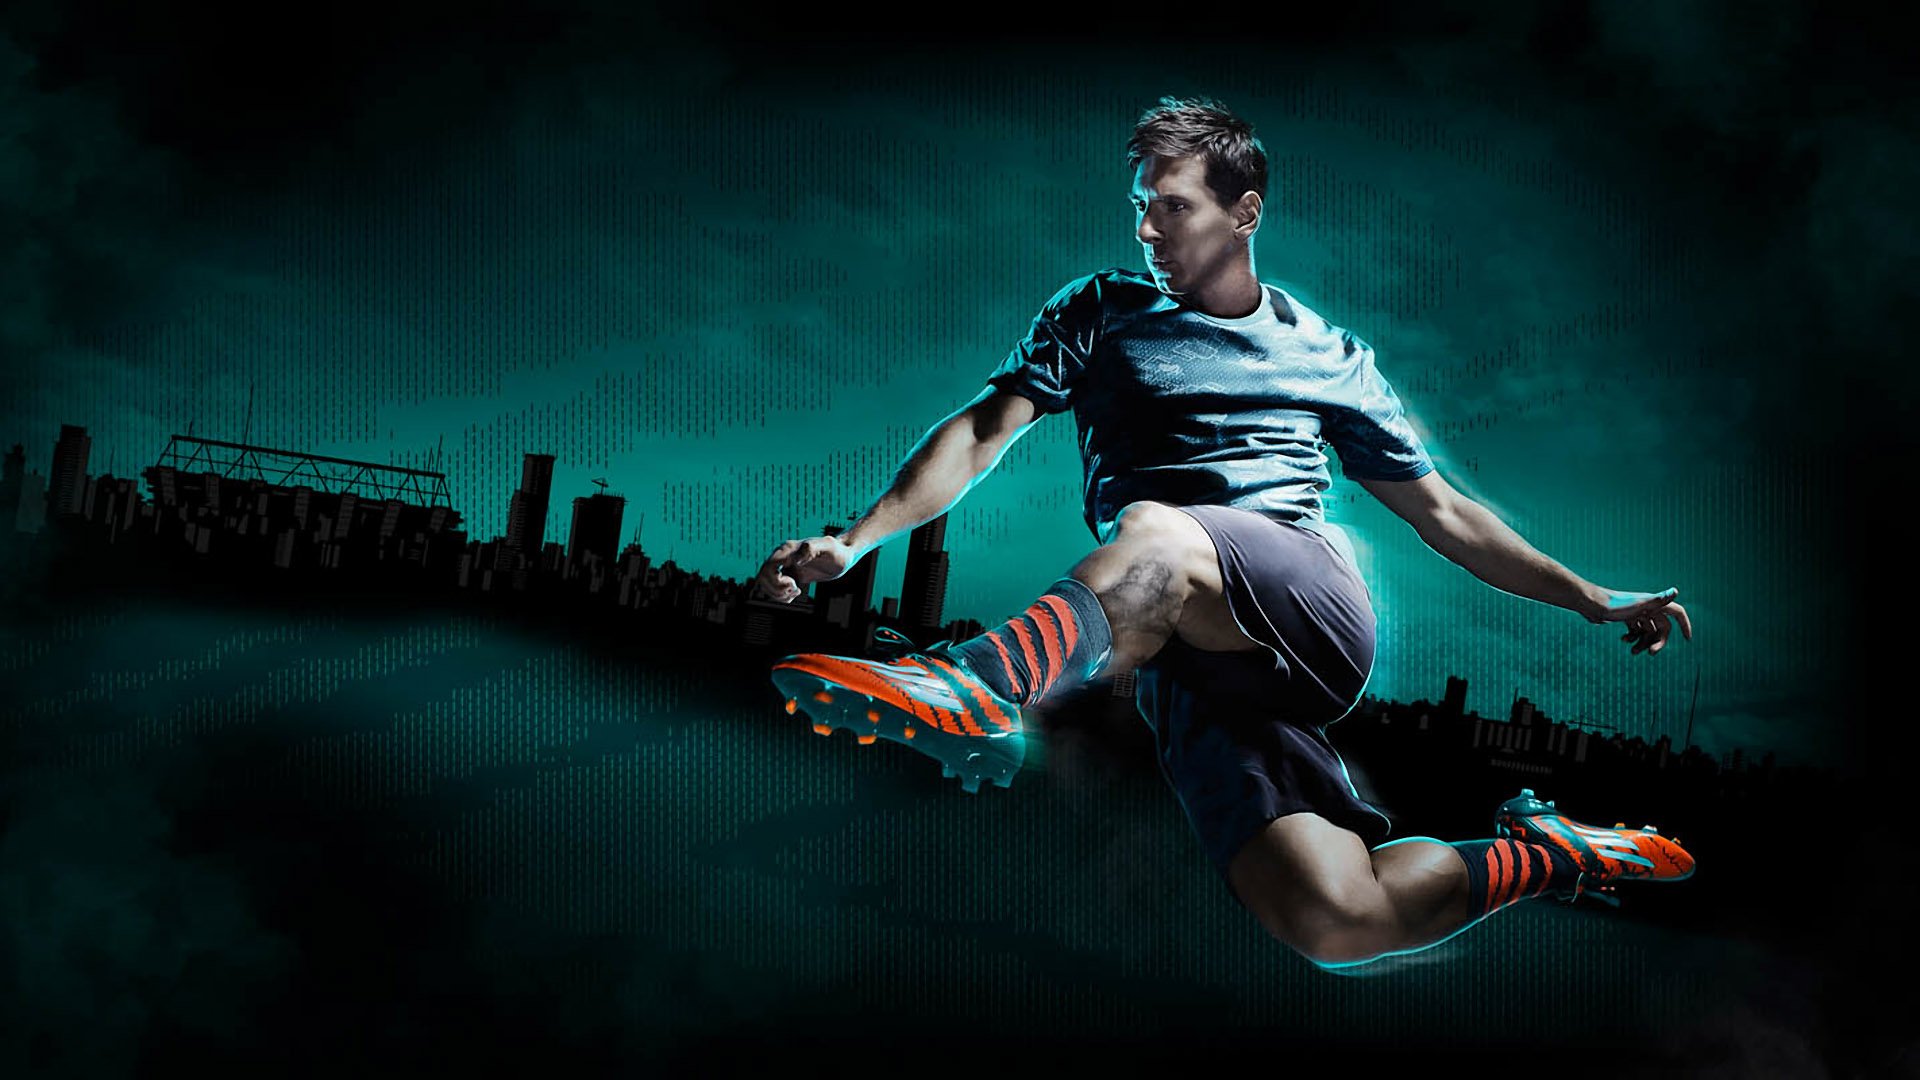 Leo Messi Adidas Mirosar10 Wallpaper Background